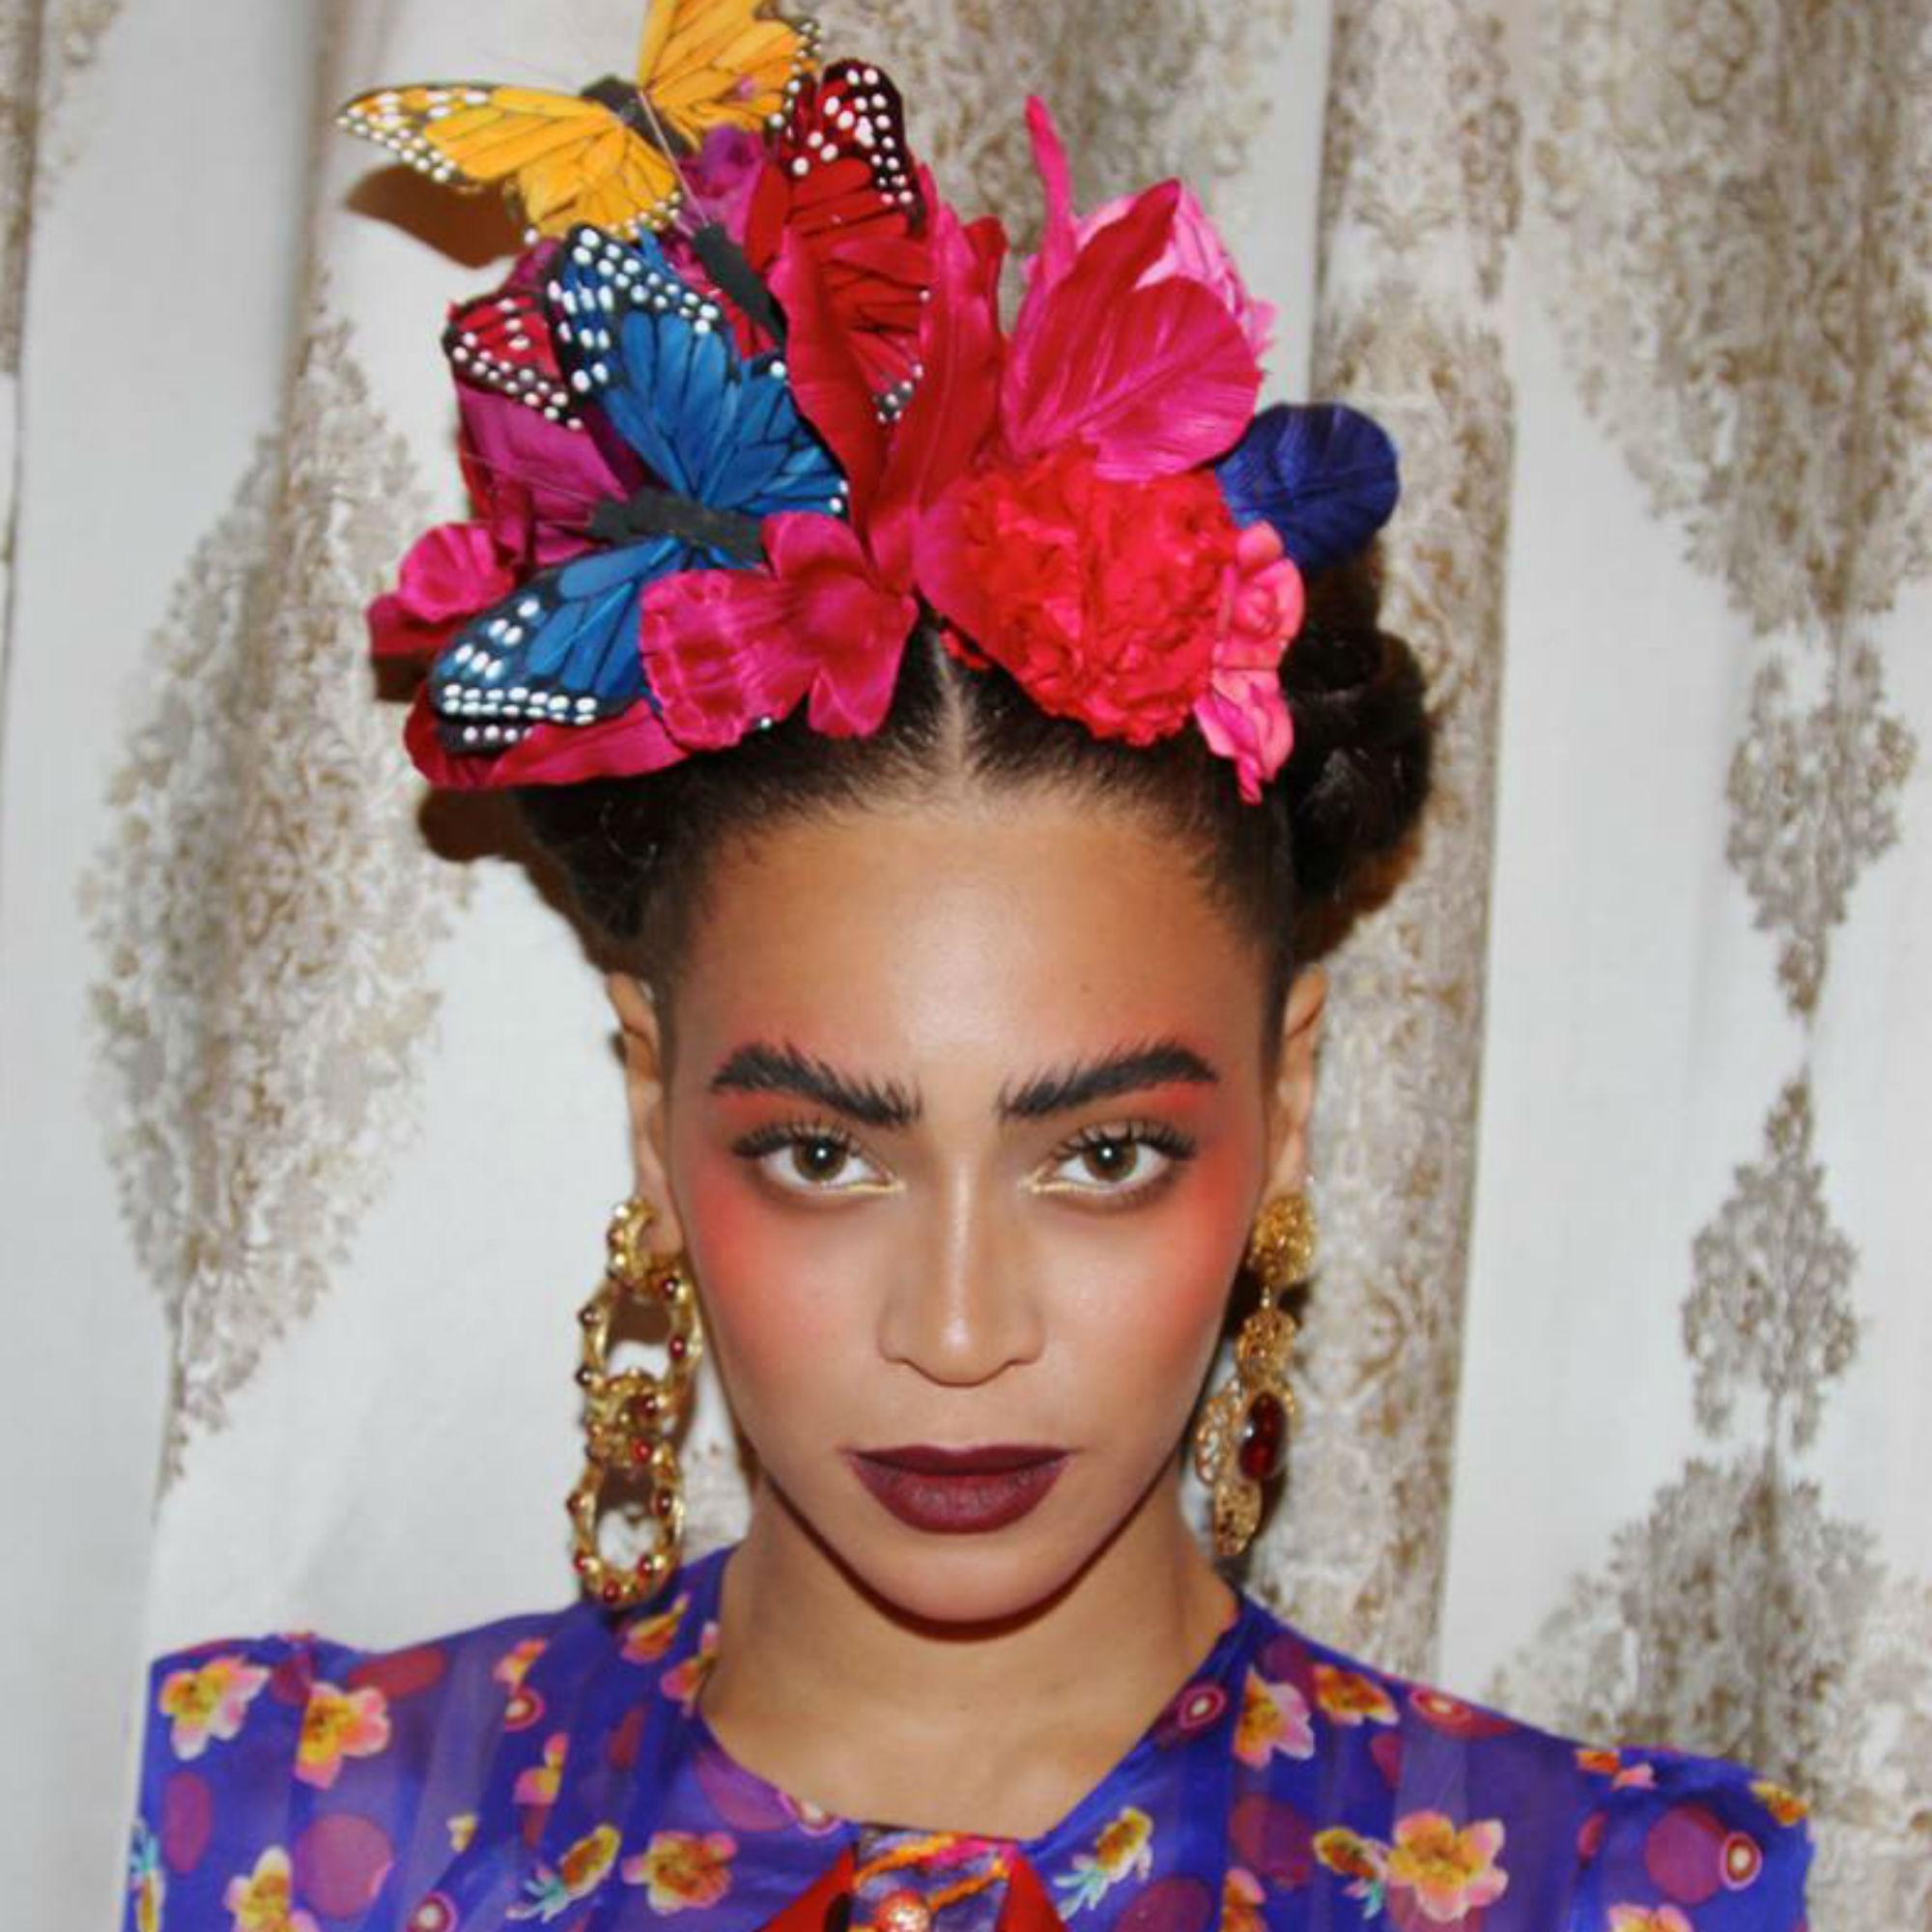 Beyoncé si è calata nei panni dell'artista messicana Frida Kahlo (foto dal profilo Facebook)